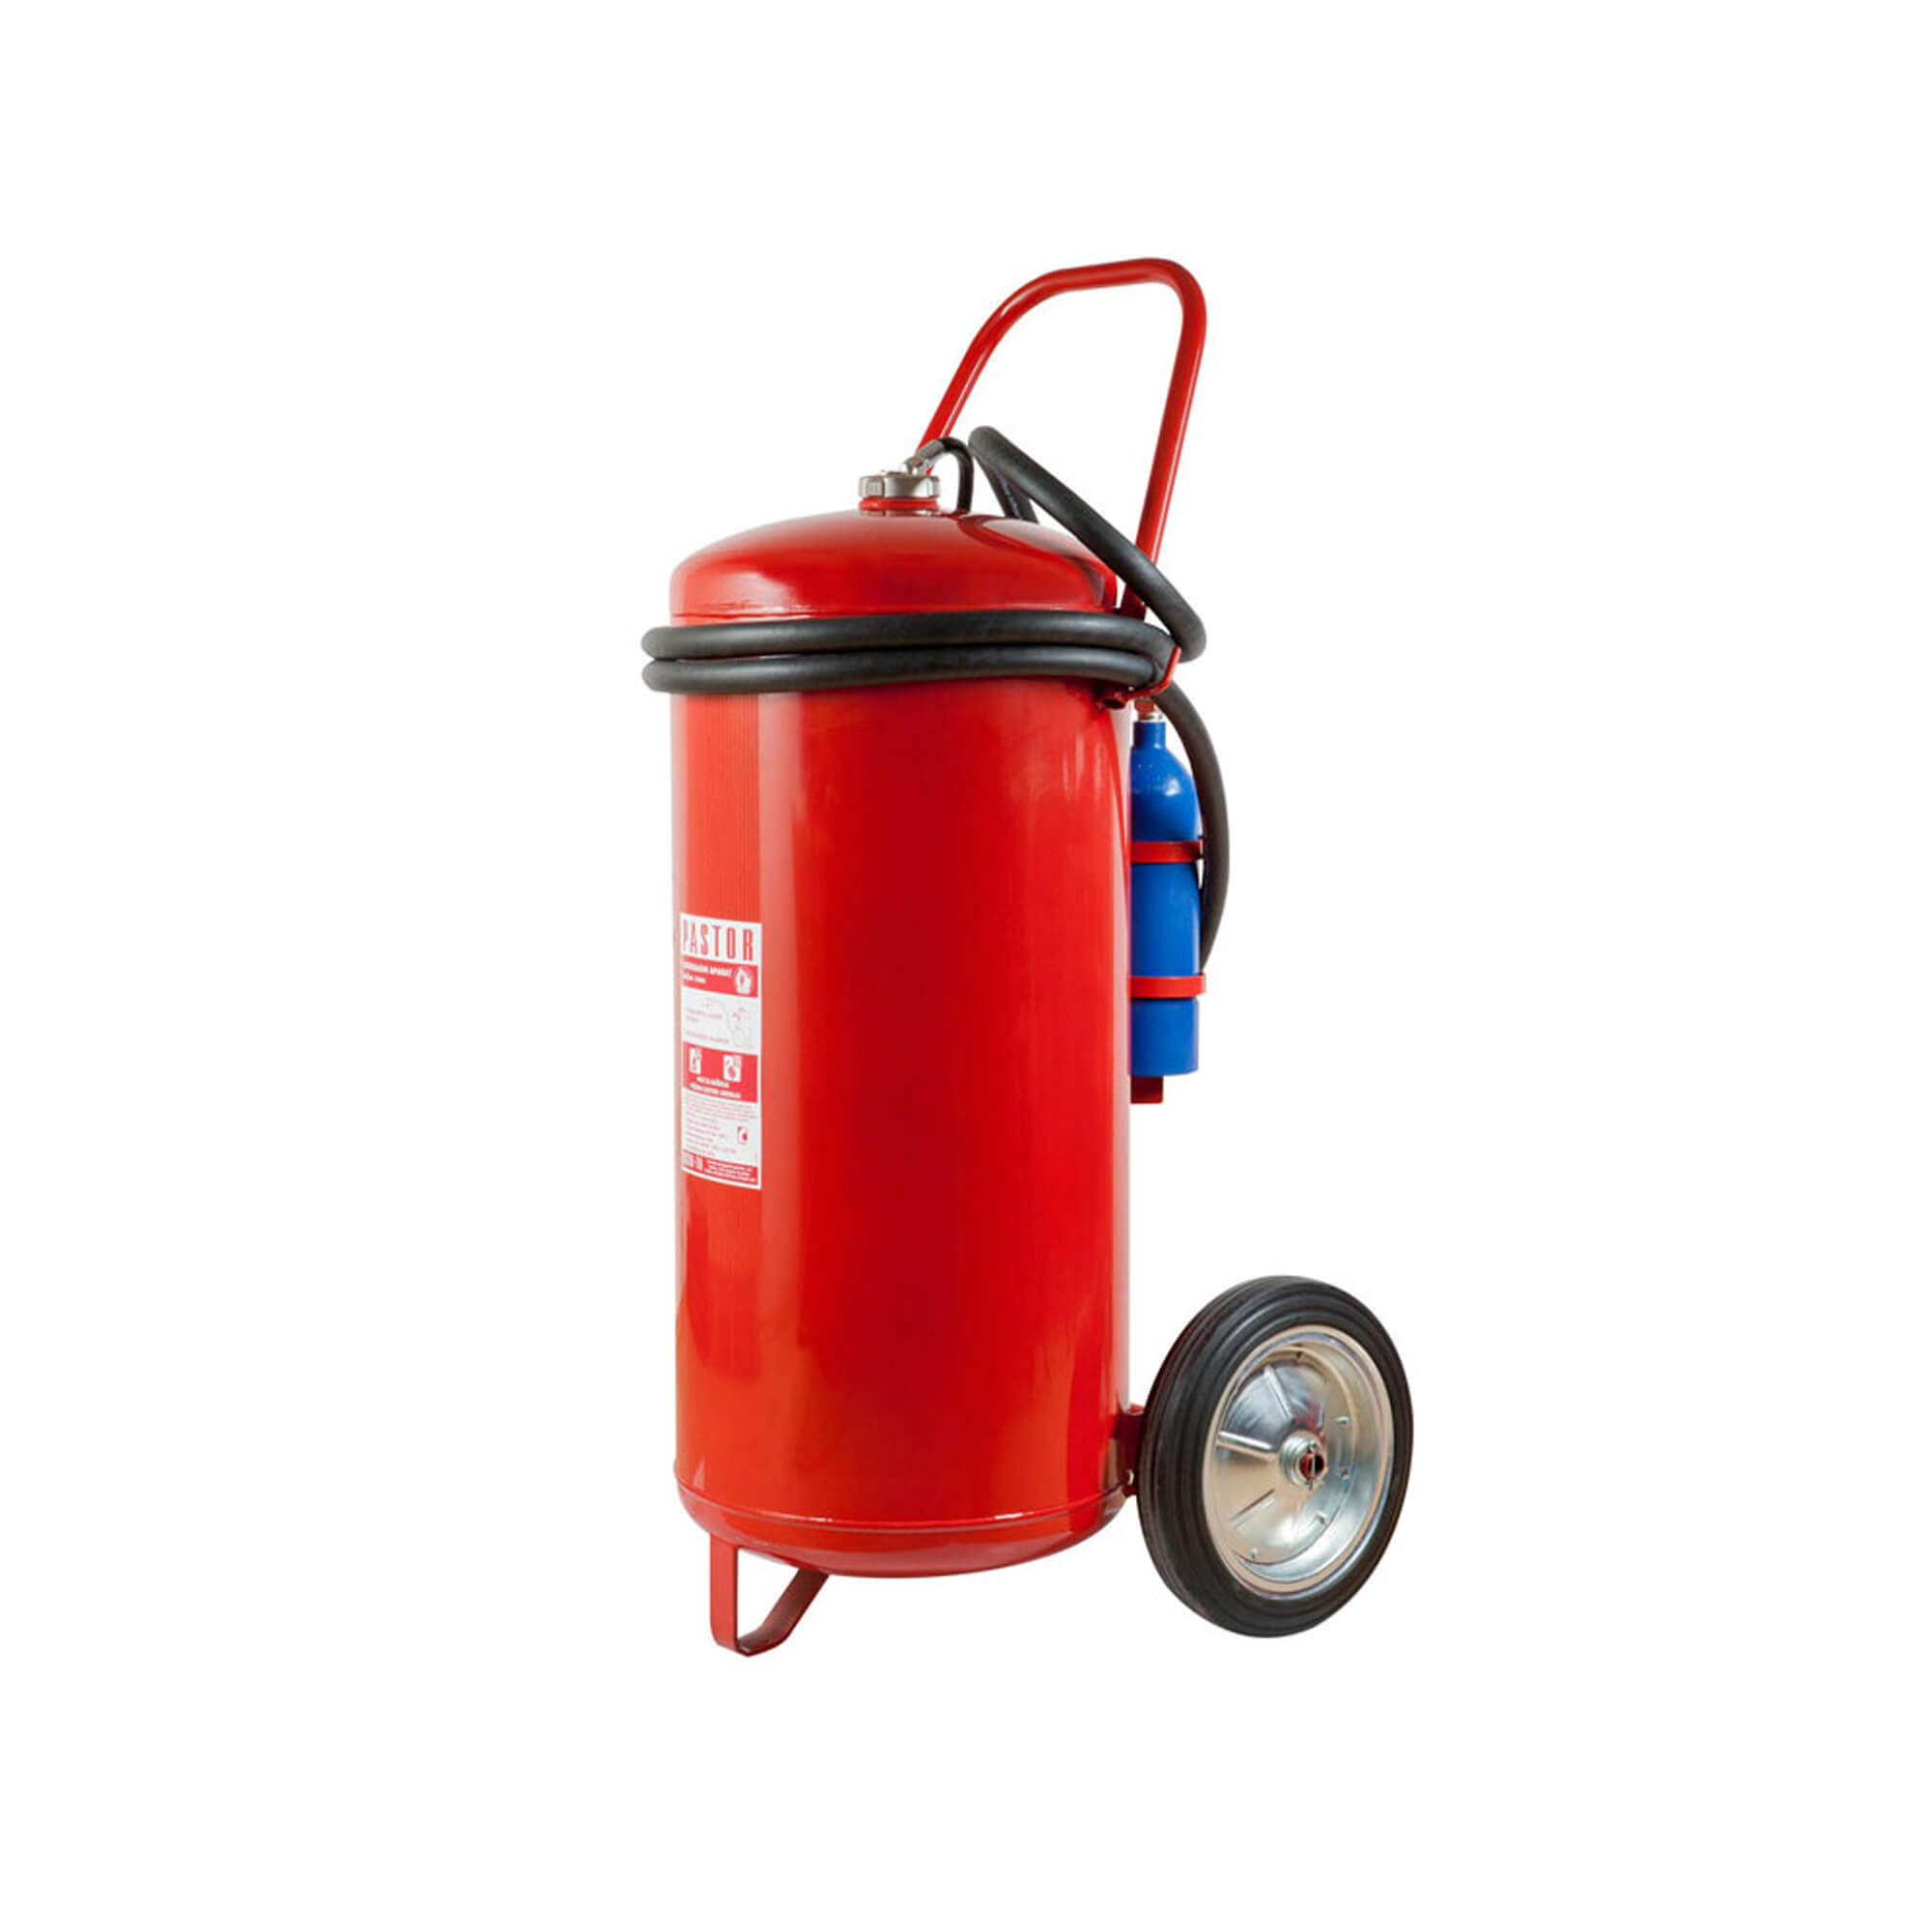 fire extinguisher PZ140 with foam afff